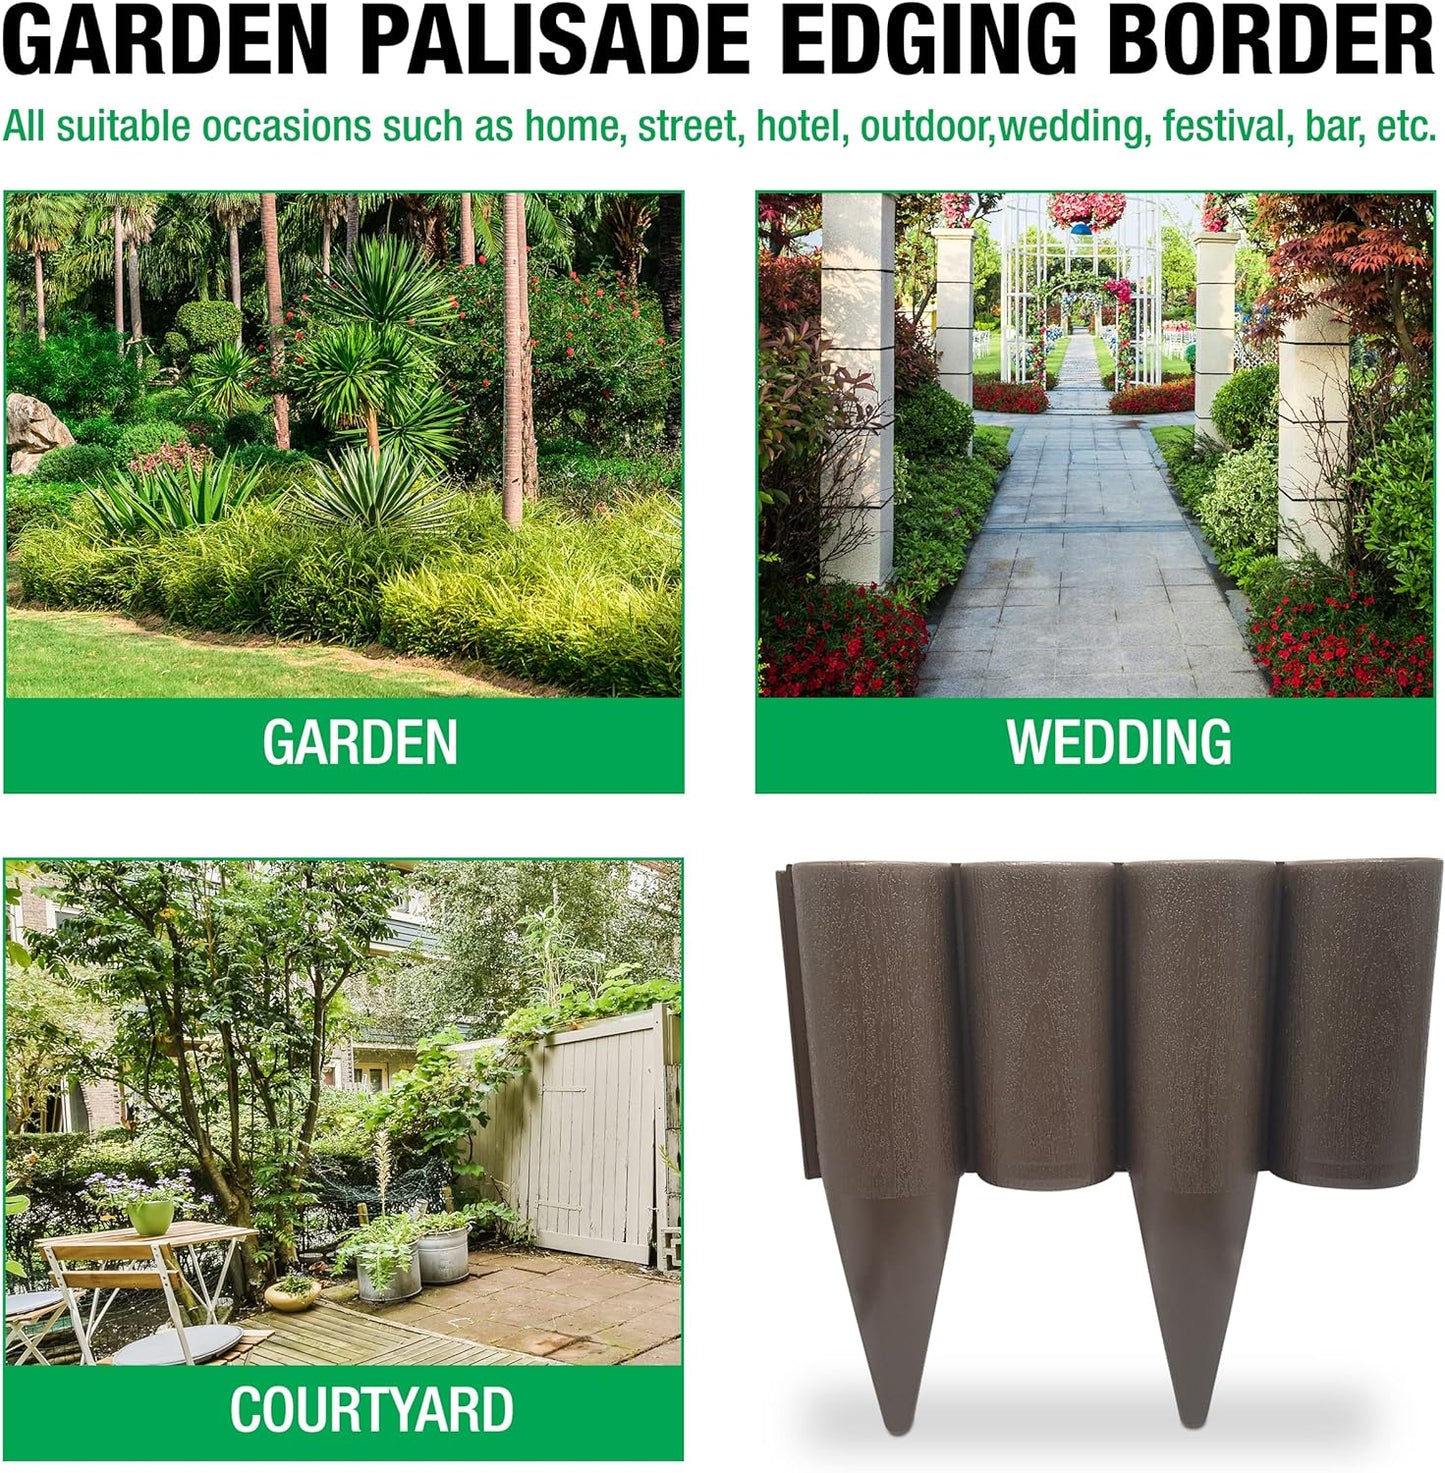 Brown Lawn Edging Border – 2.5 metres / 8.2 ft long Garden Palisade Edge Border with Wood Log Effect